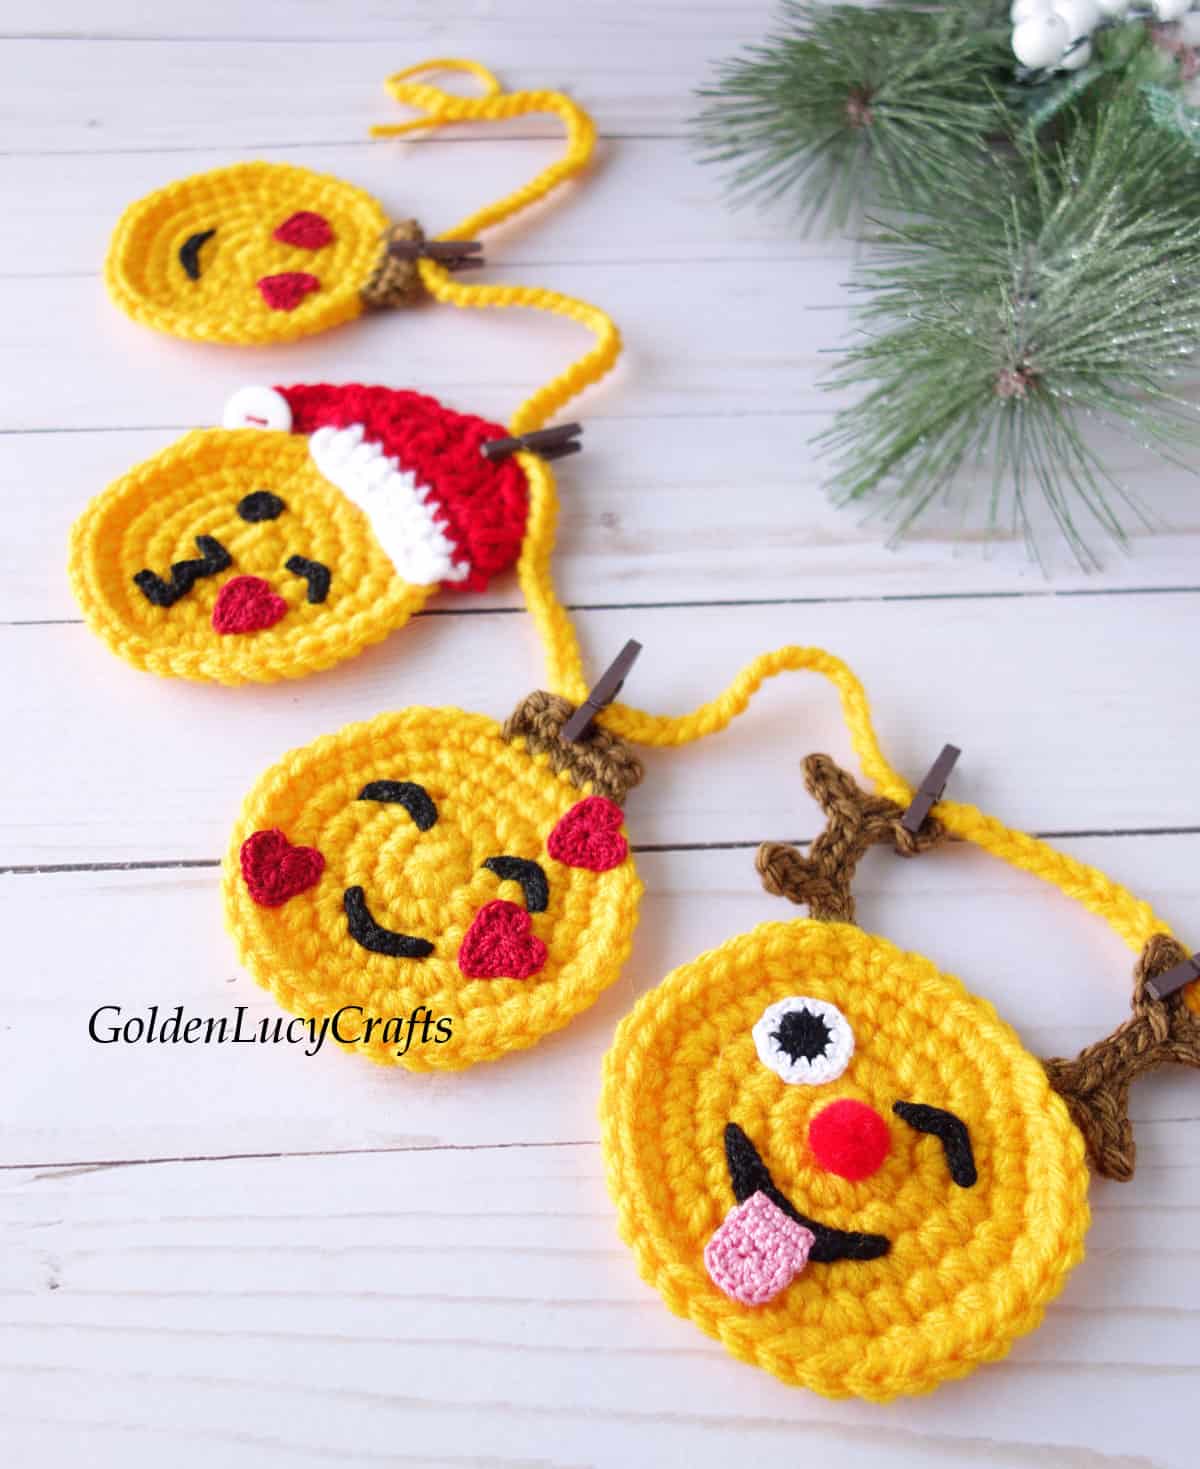 Crochet Christmas emoji garland close up image.